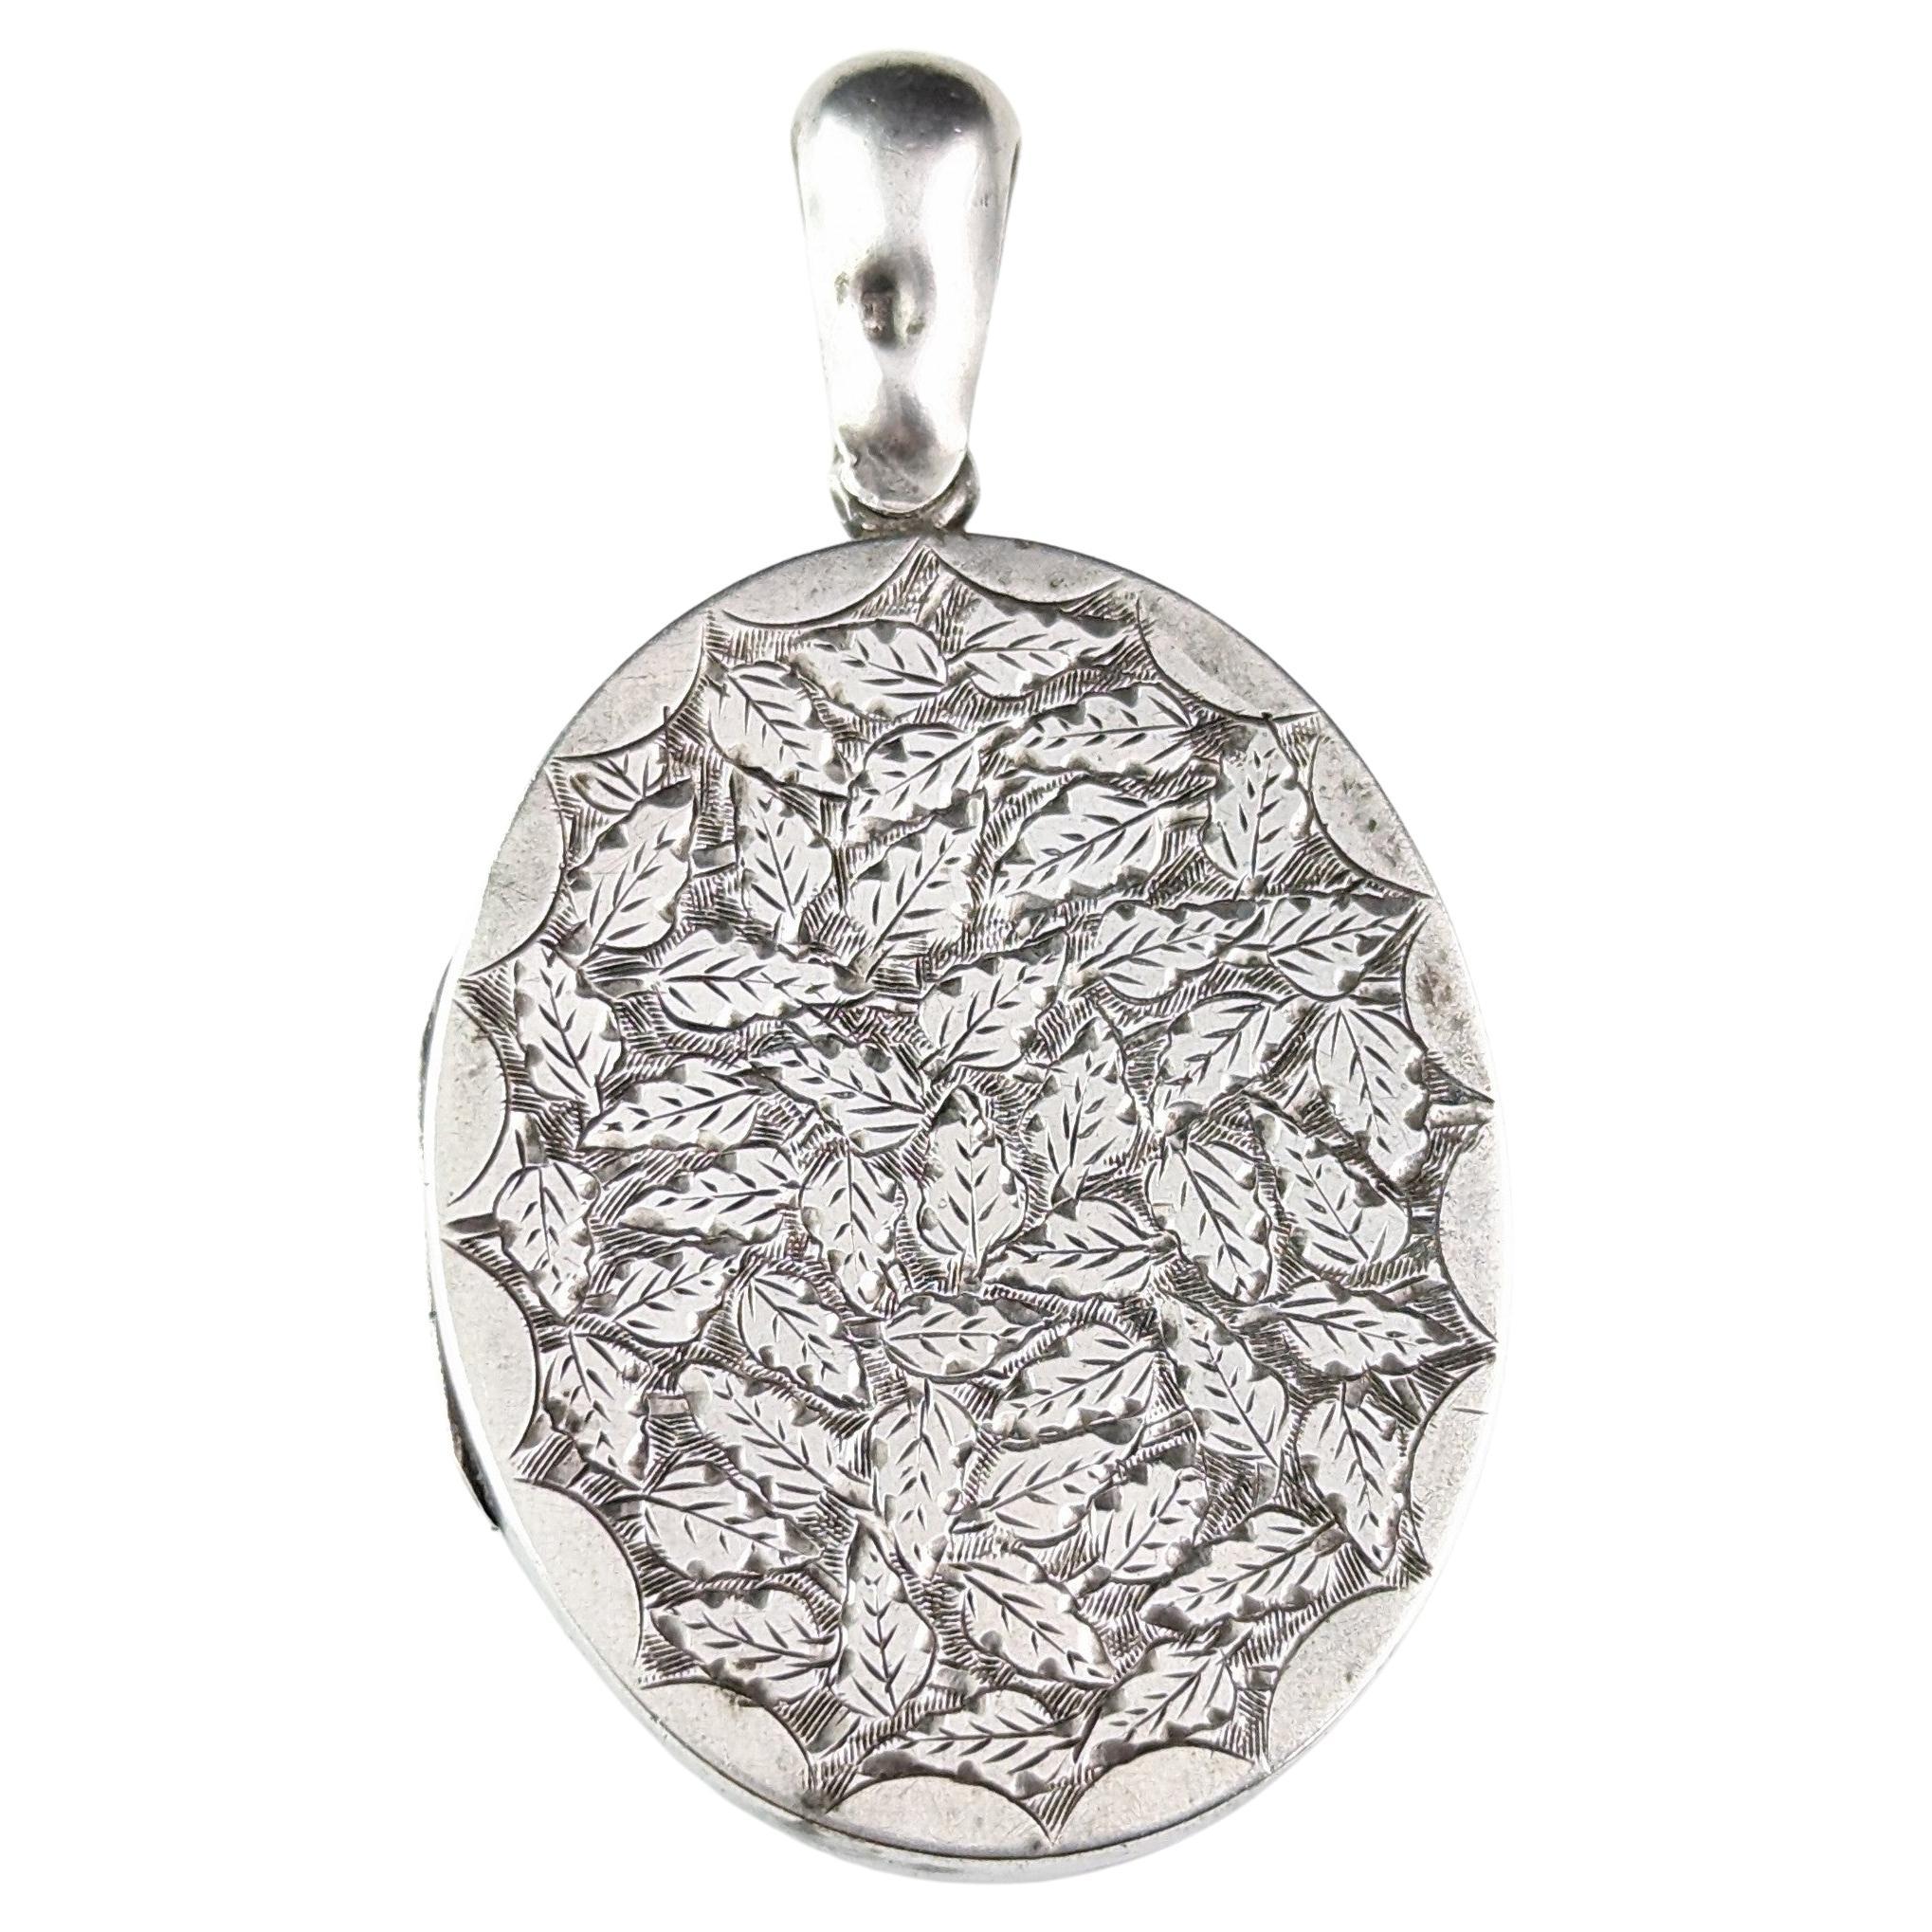 Antique Victorian silver locket pendant, Leaf engraved, Aesthetic 